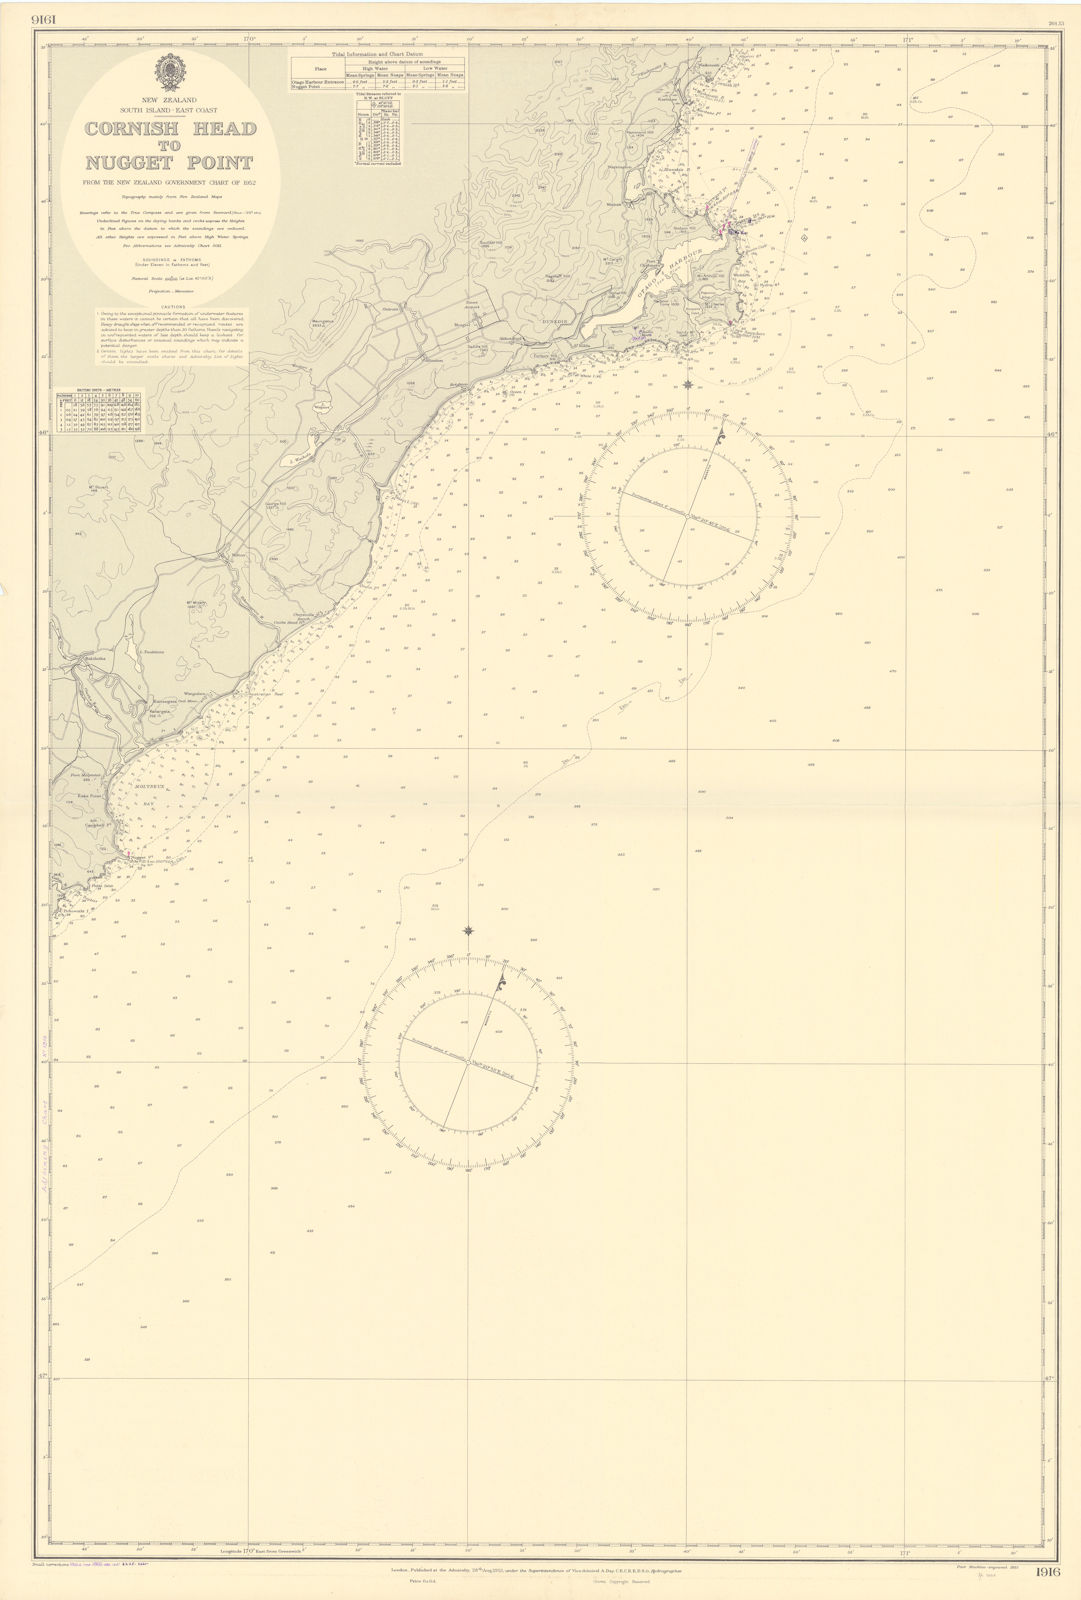 South Island New Zealand Otago coast Dunedin ADMIRALTY sea chart 1953 (1955) map